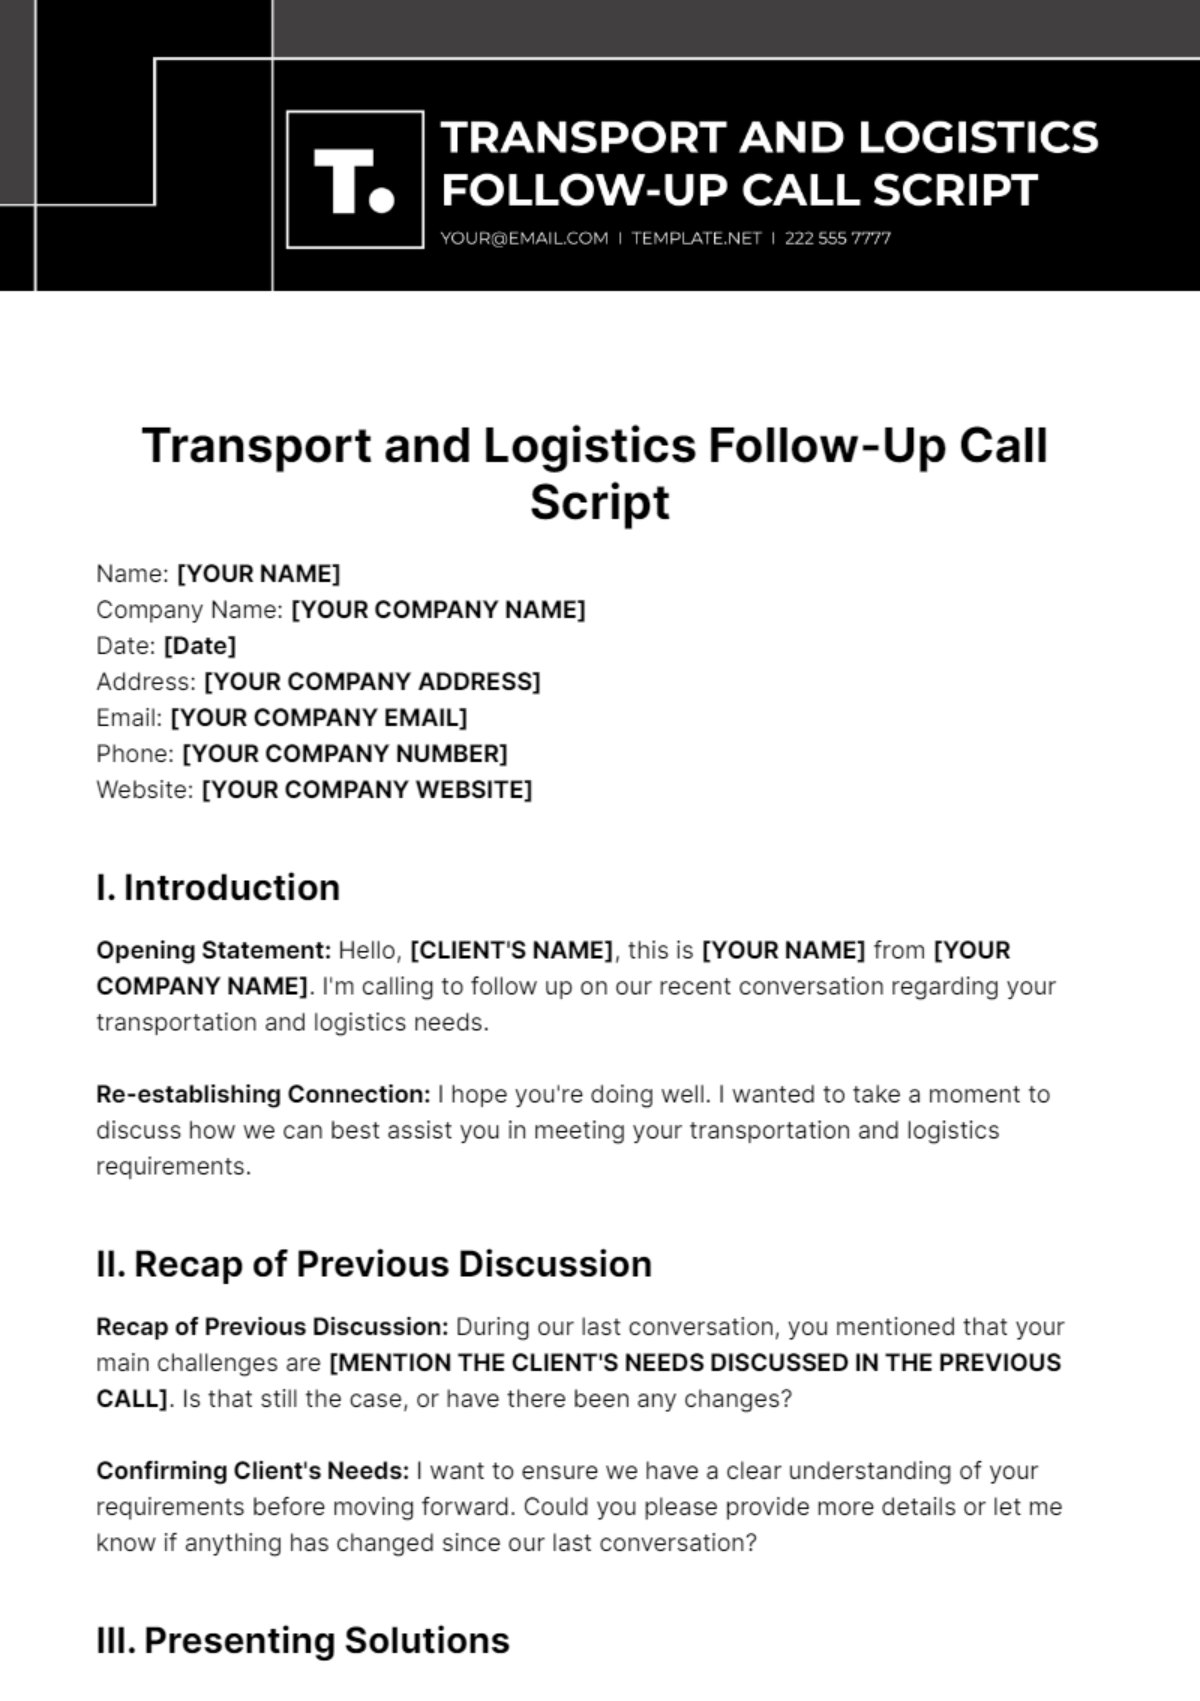 Transport And Logistics Follow-Up Call Script Template